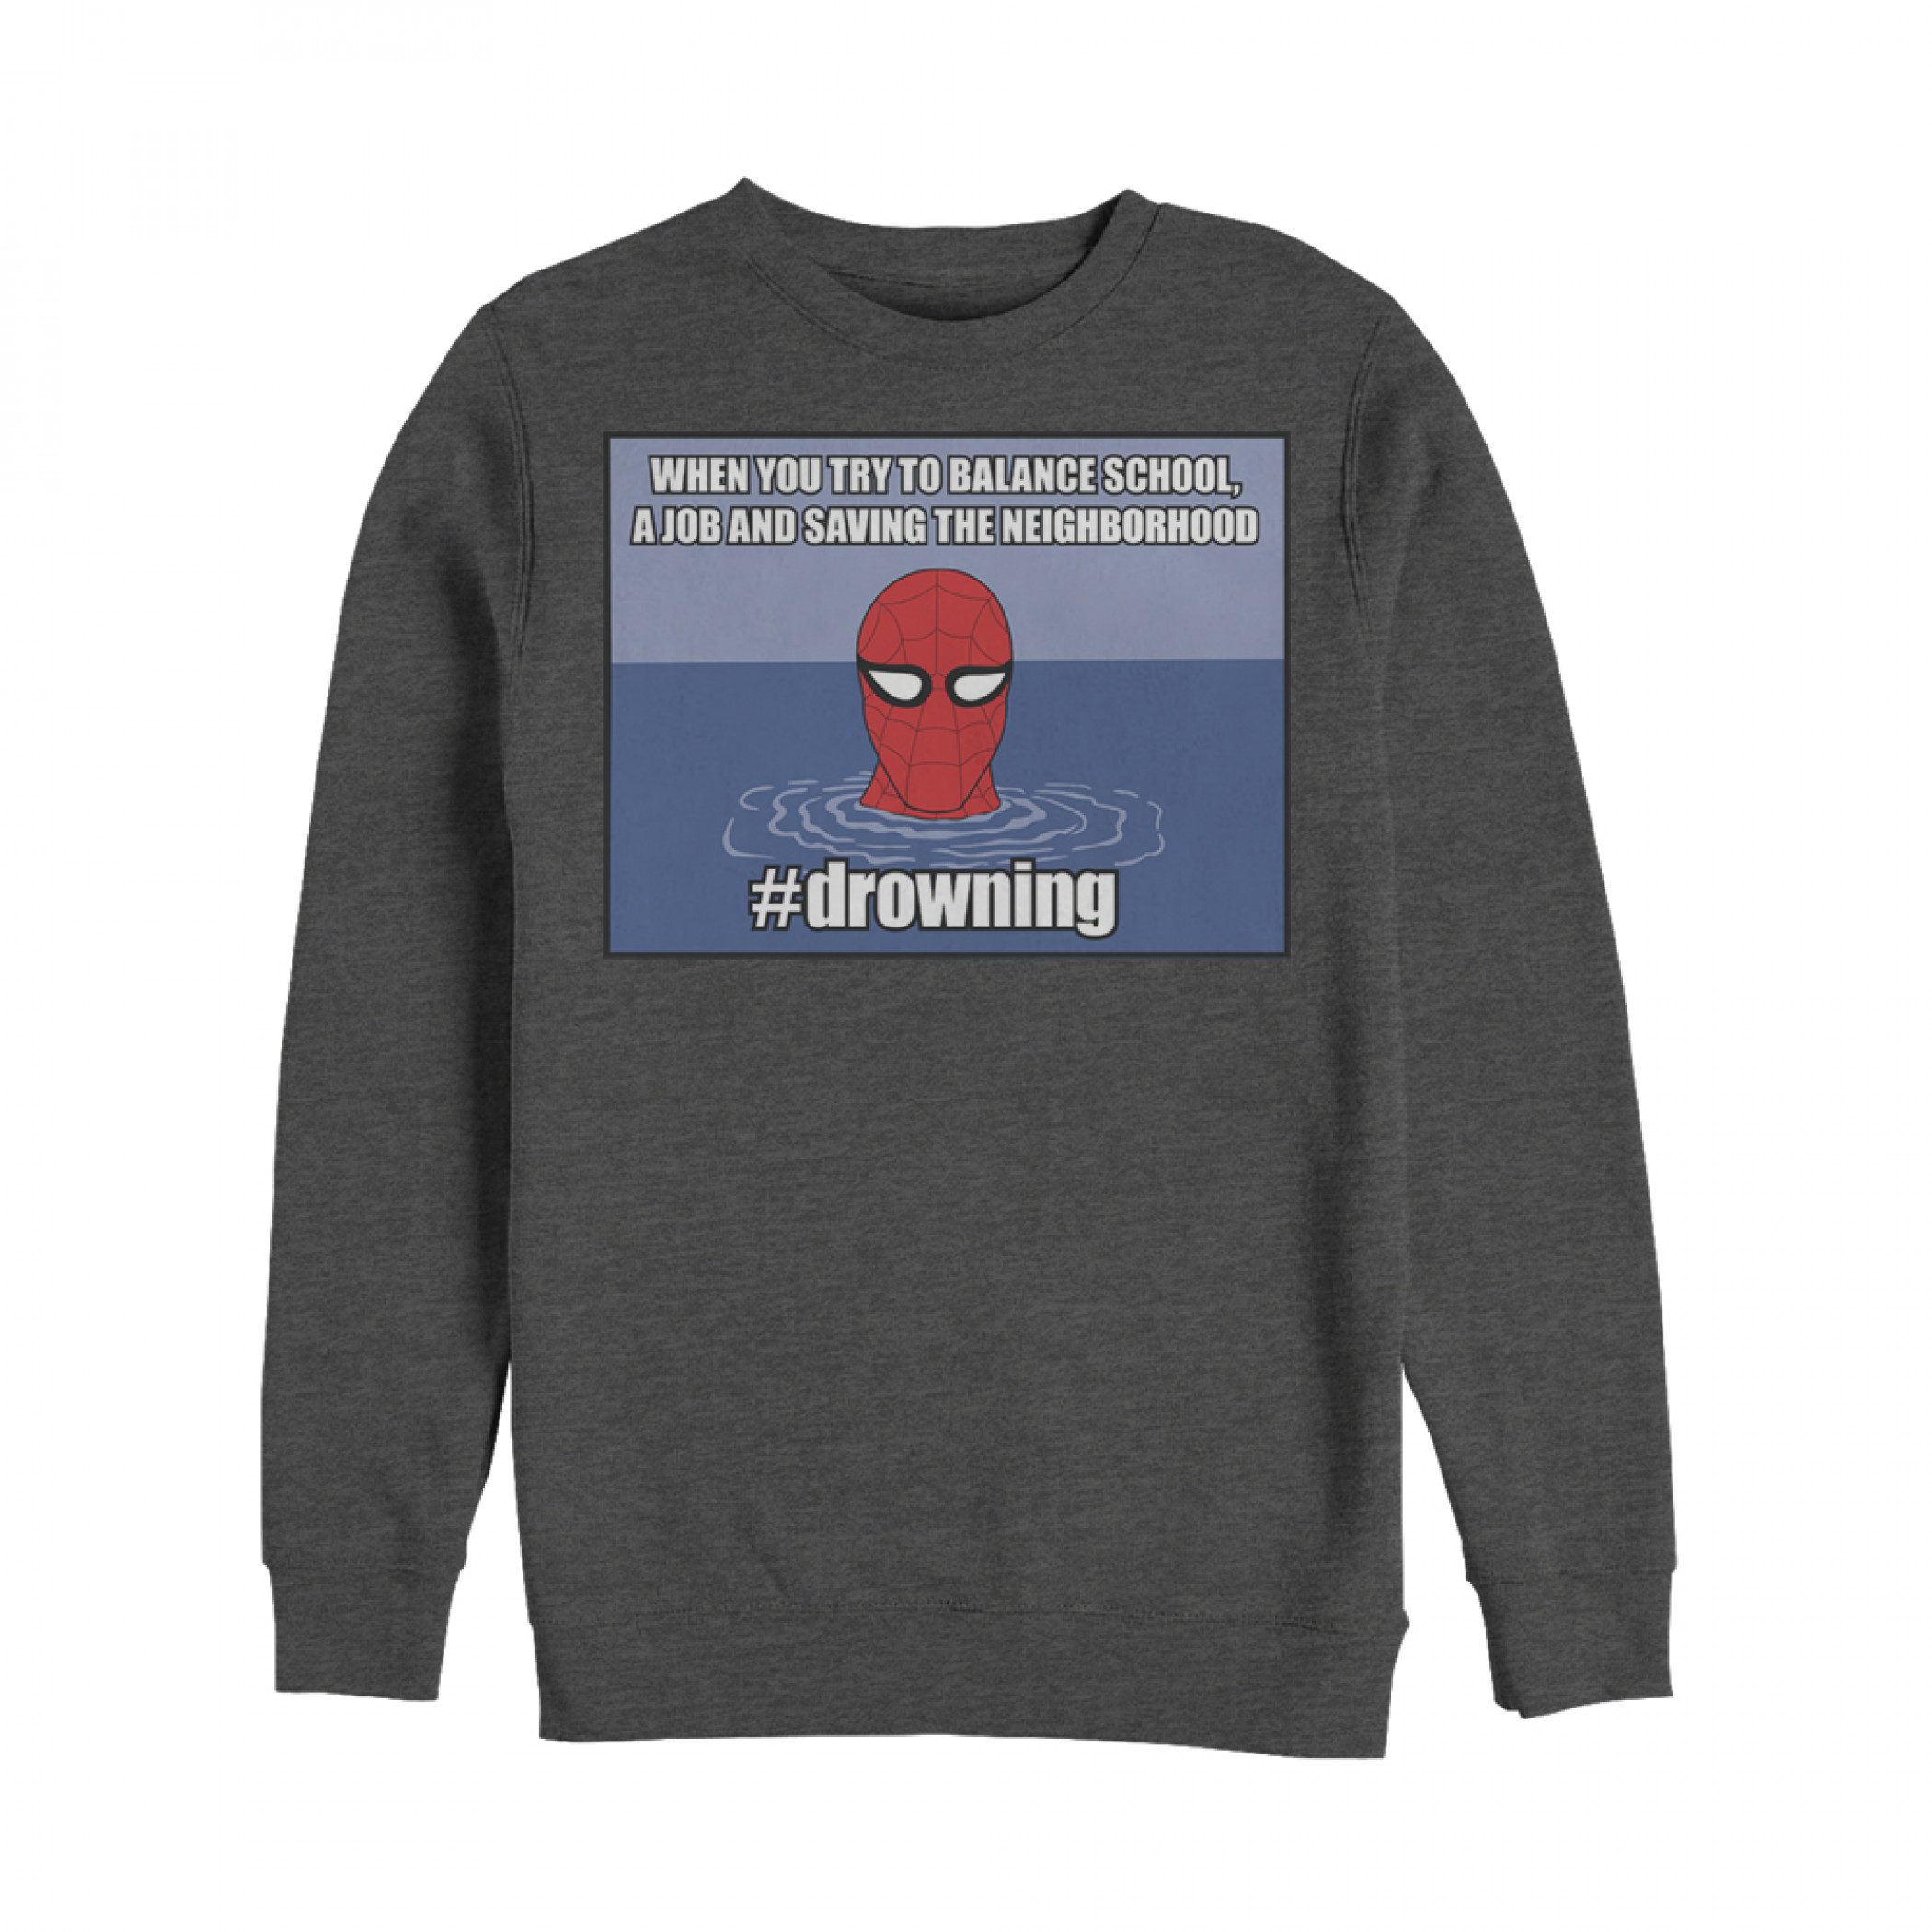 Marvel Spider-Man #drowning Sweatshirt